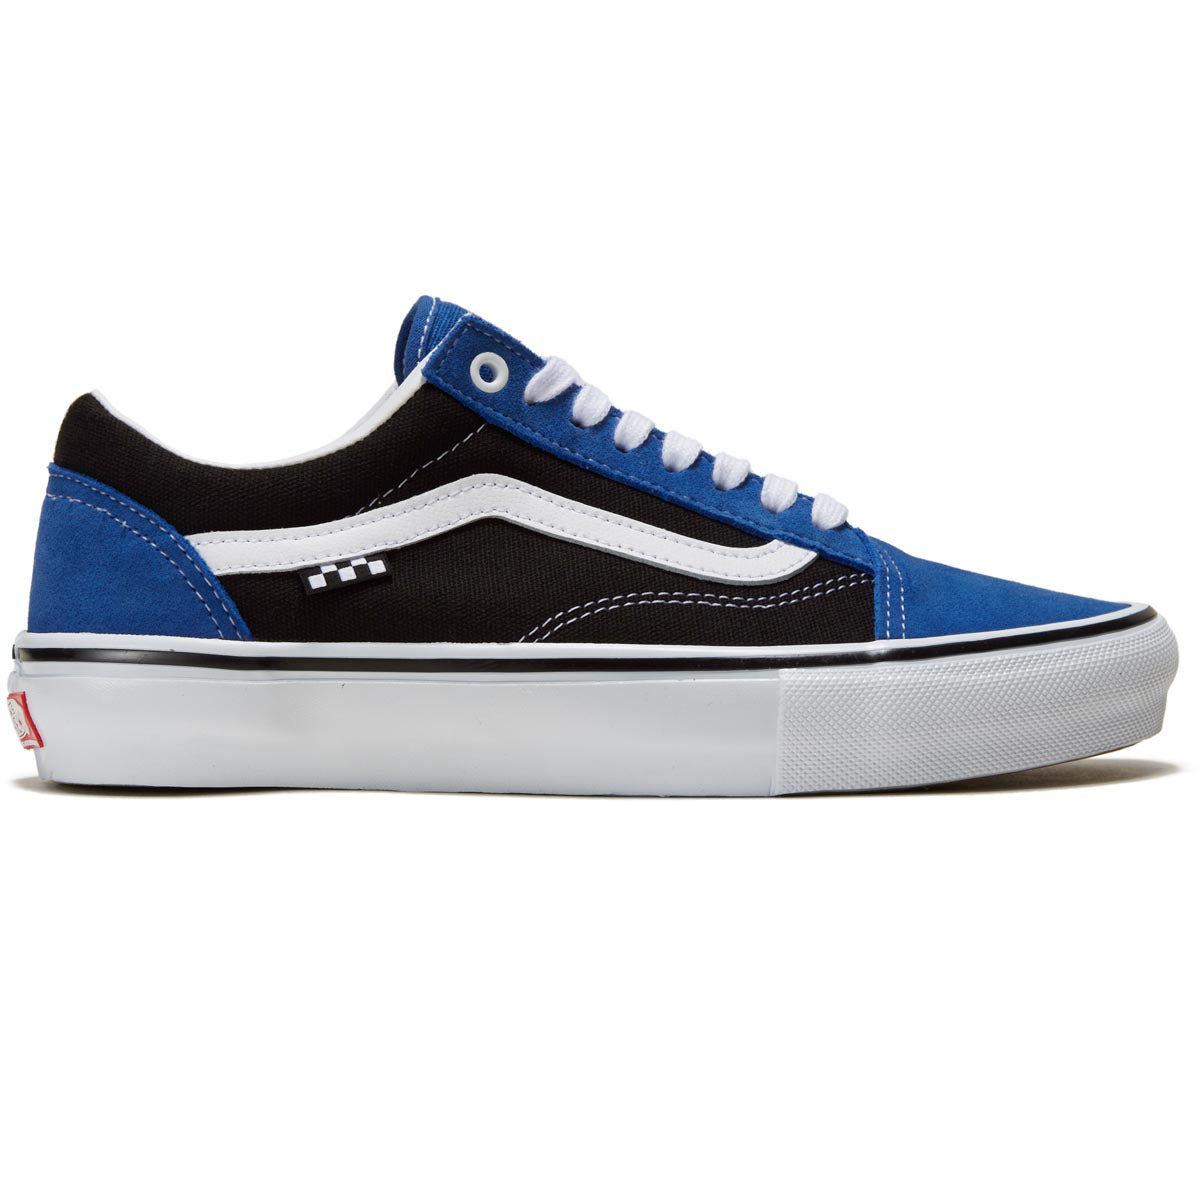 Vans Skate Old Skool Shoes - Blue/Black/White image 1